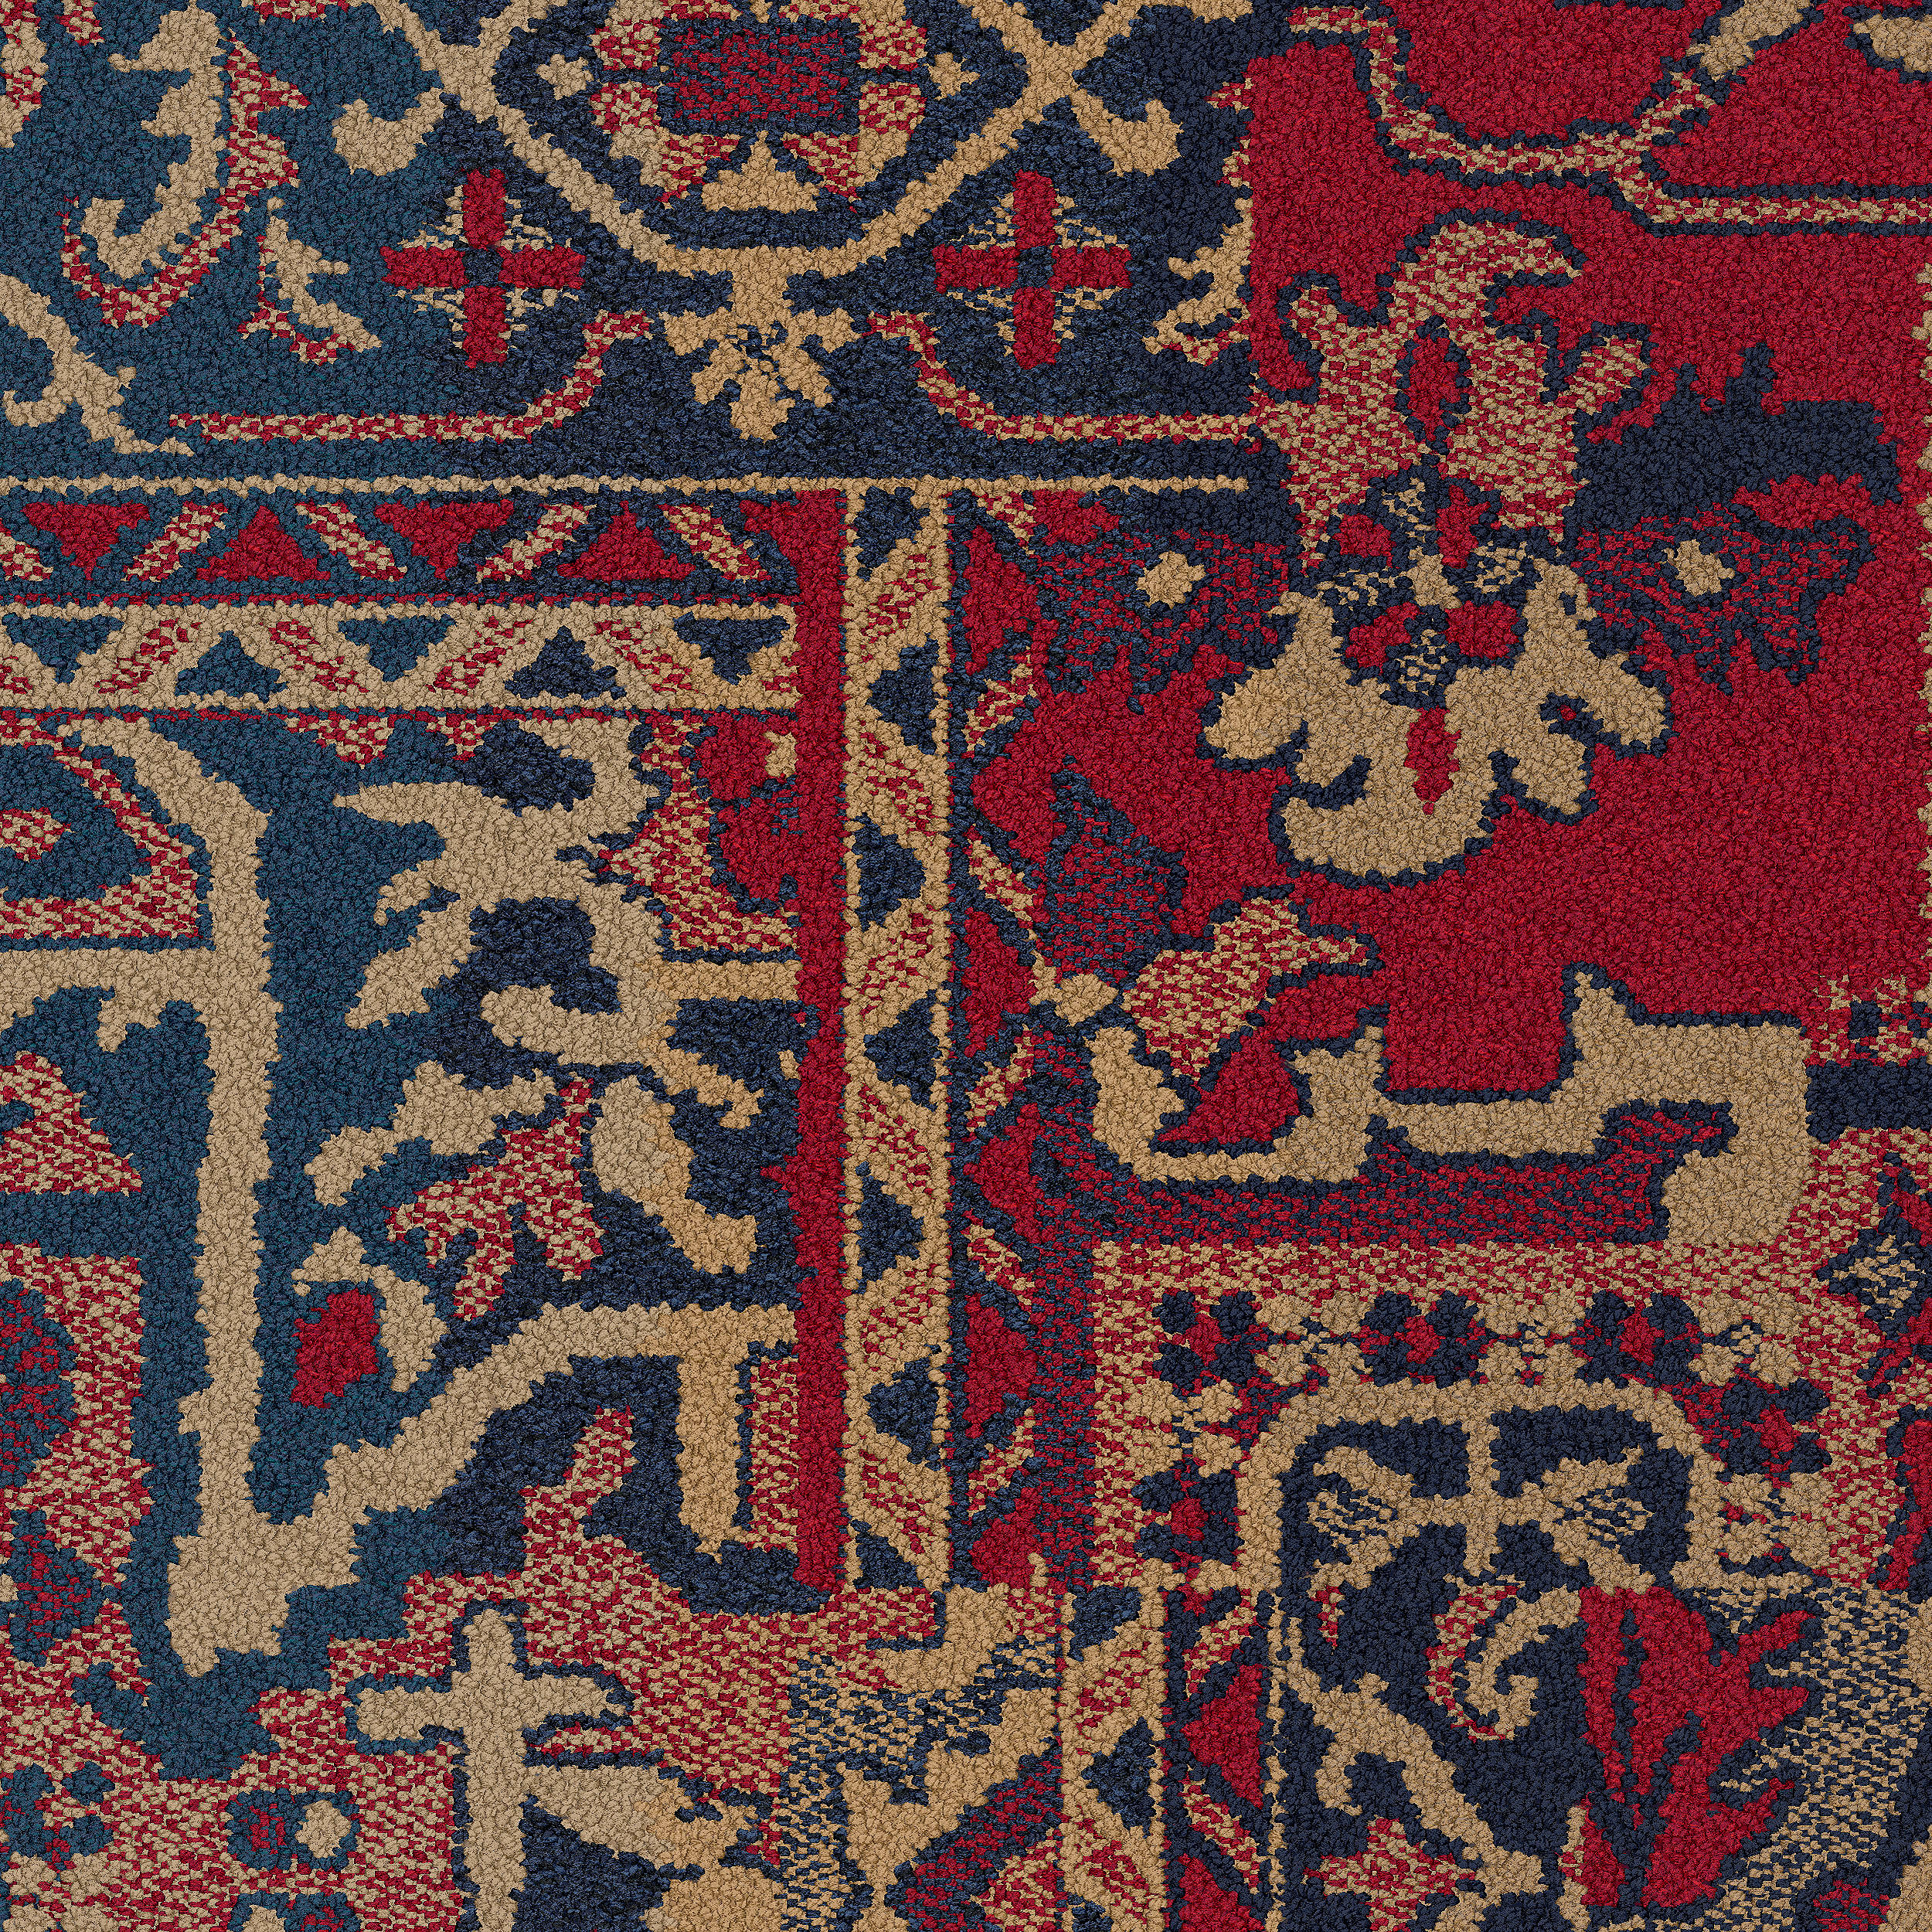 Antiquities carpet tile in Crimson Bildnummer 6